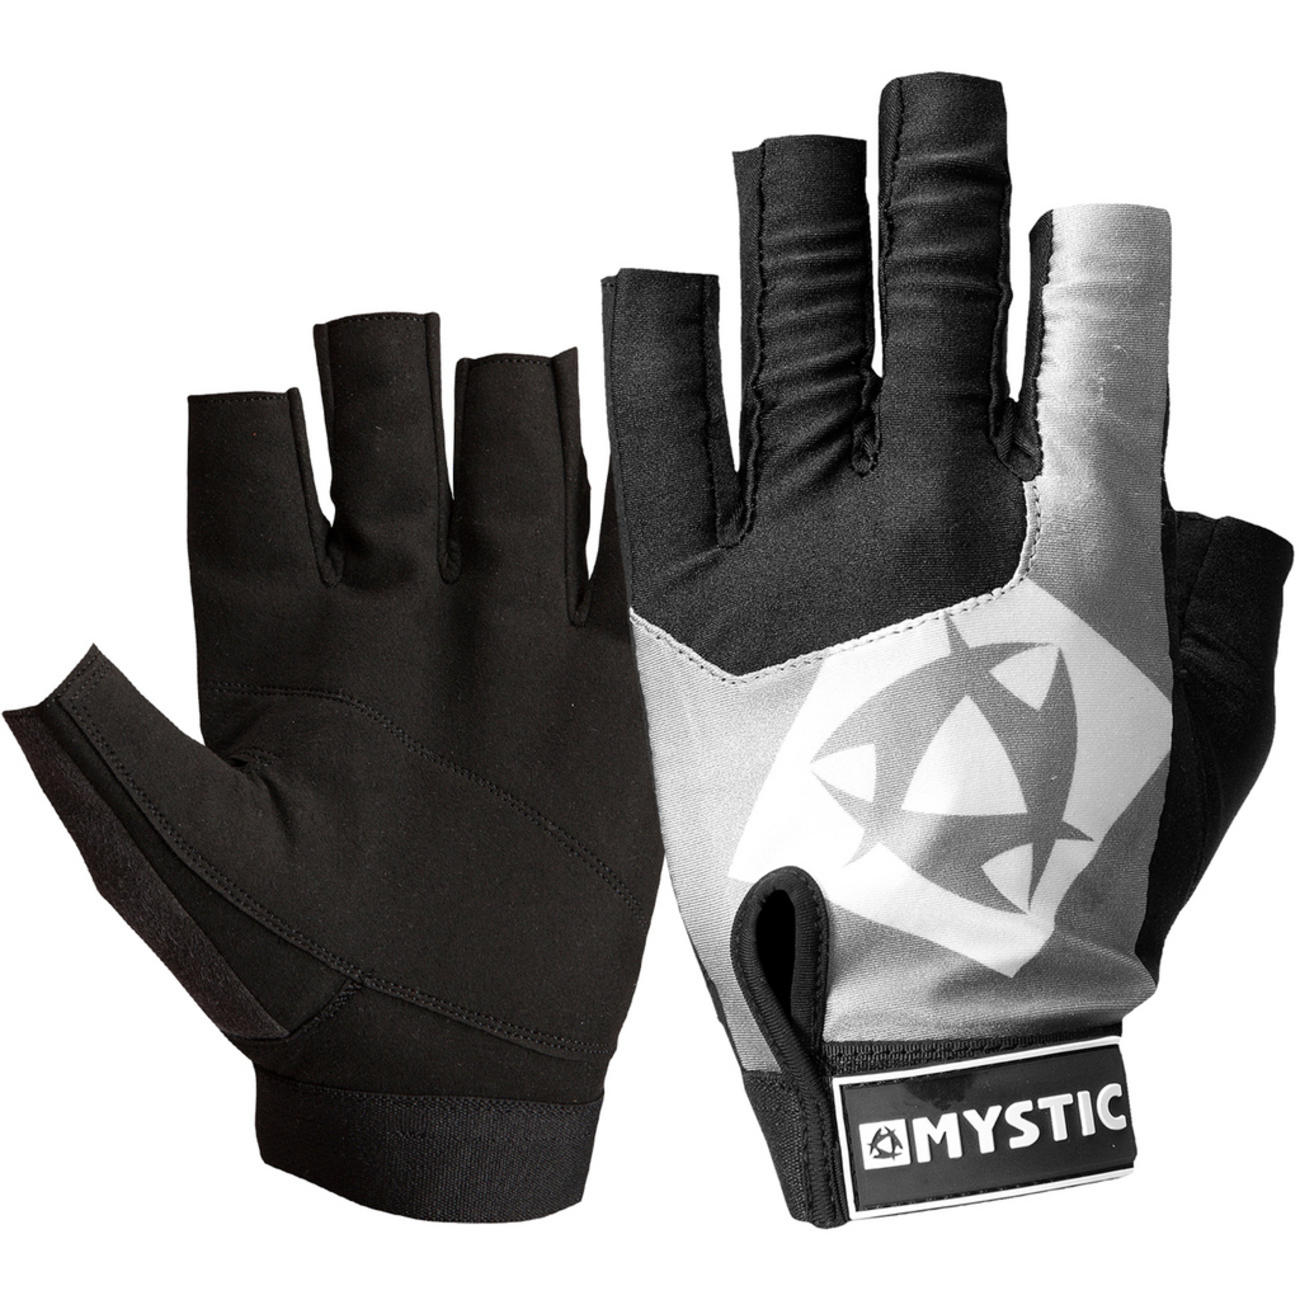 Rash Glove S/F ネオプレングローブ ショートフィンガー